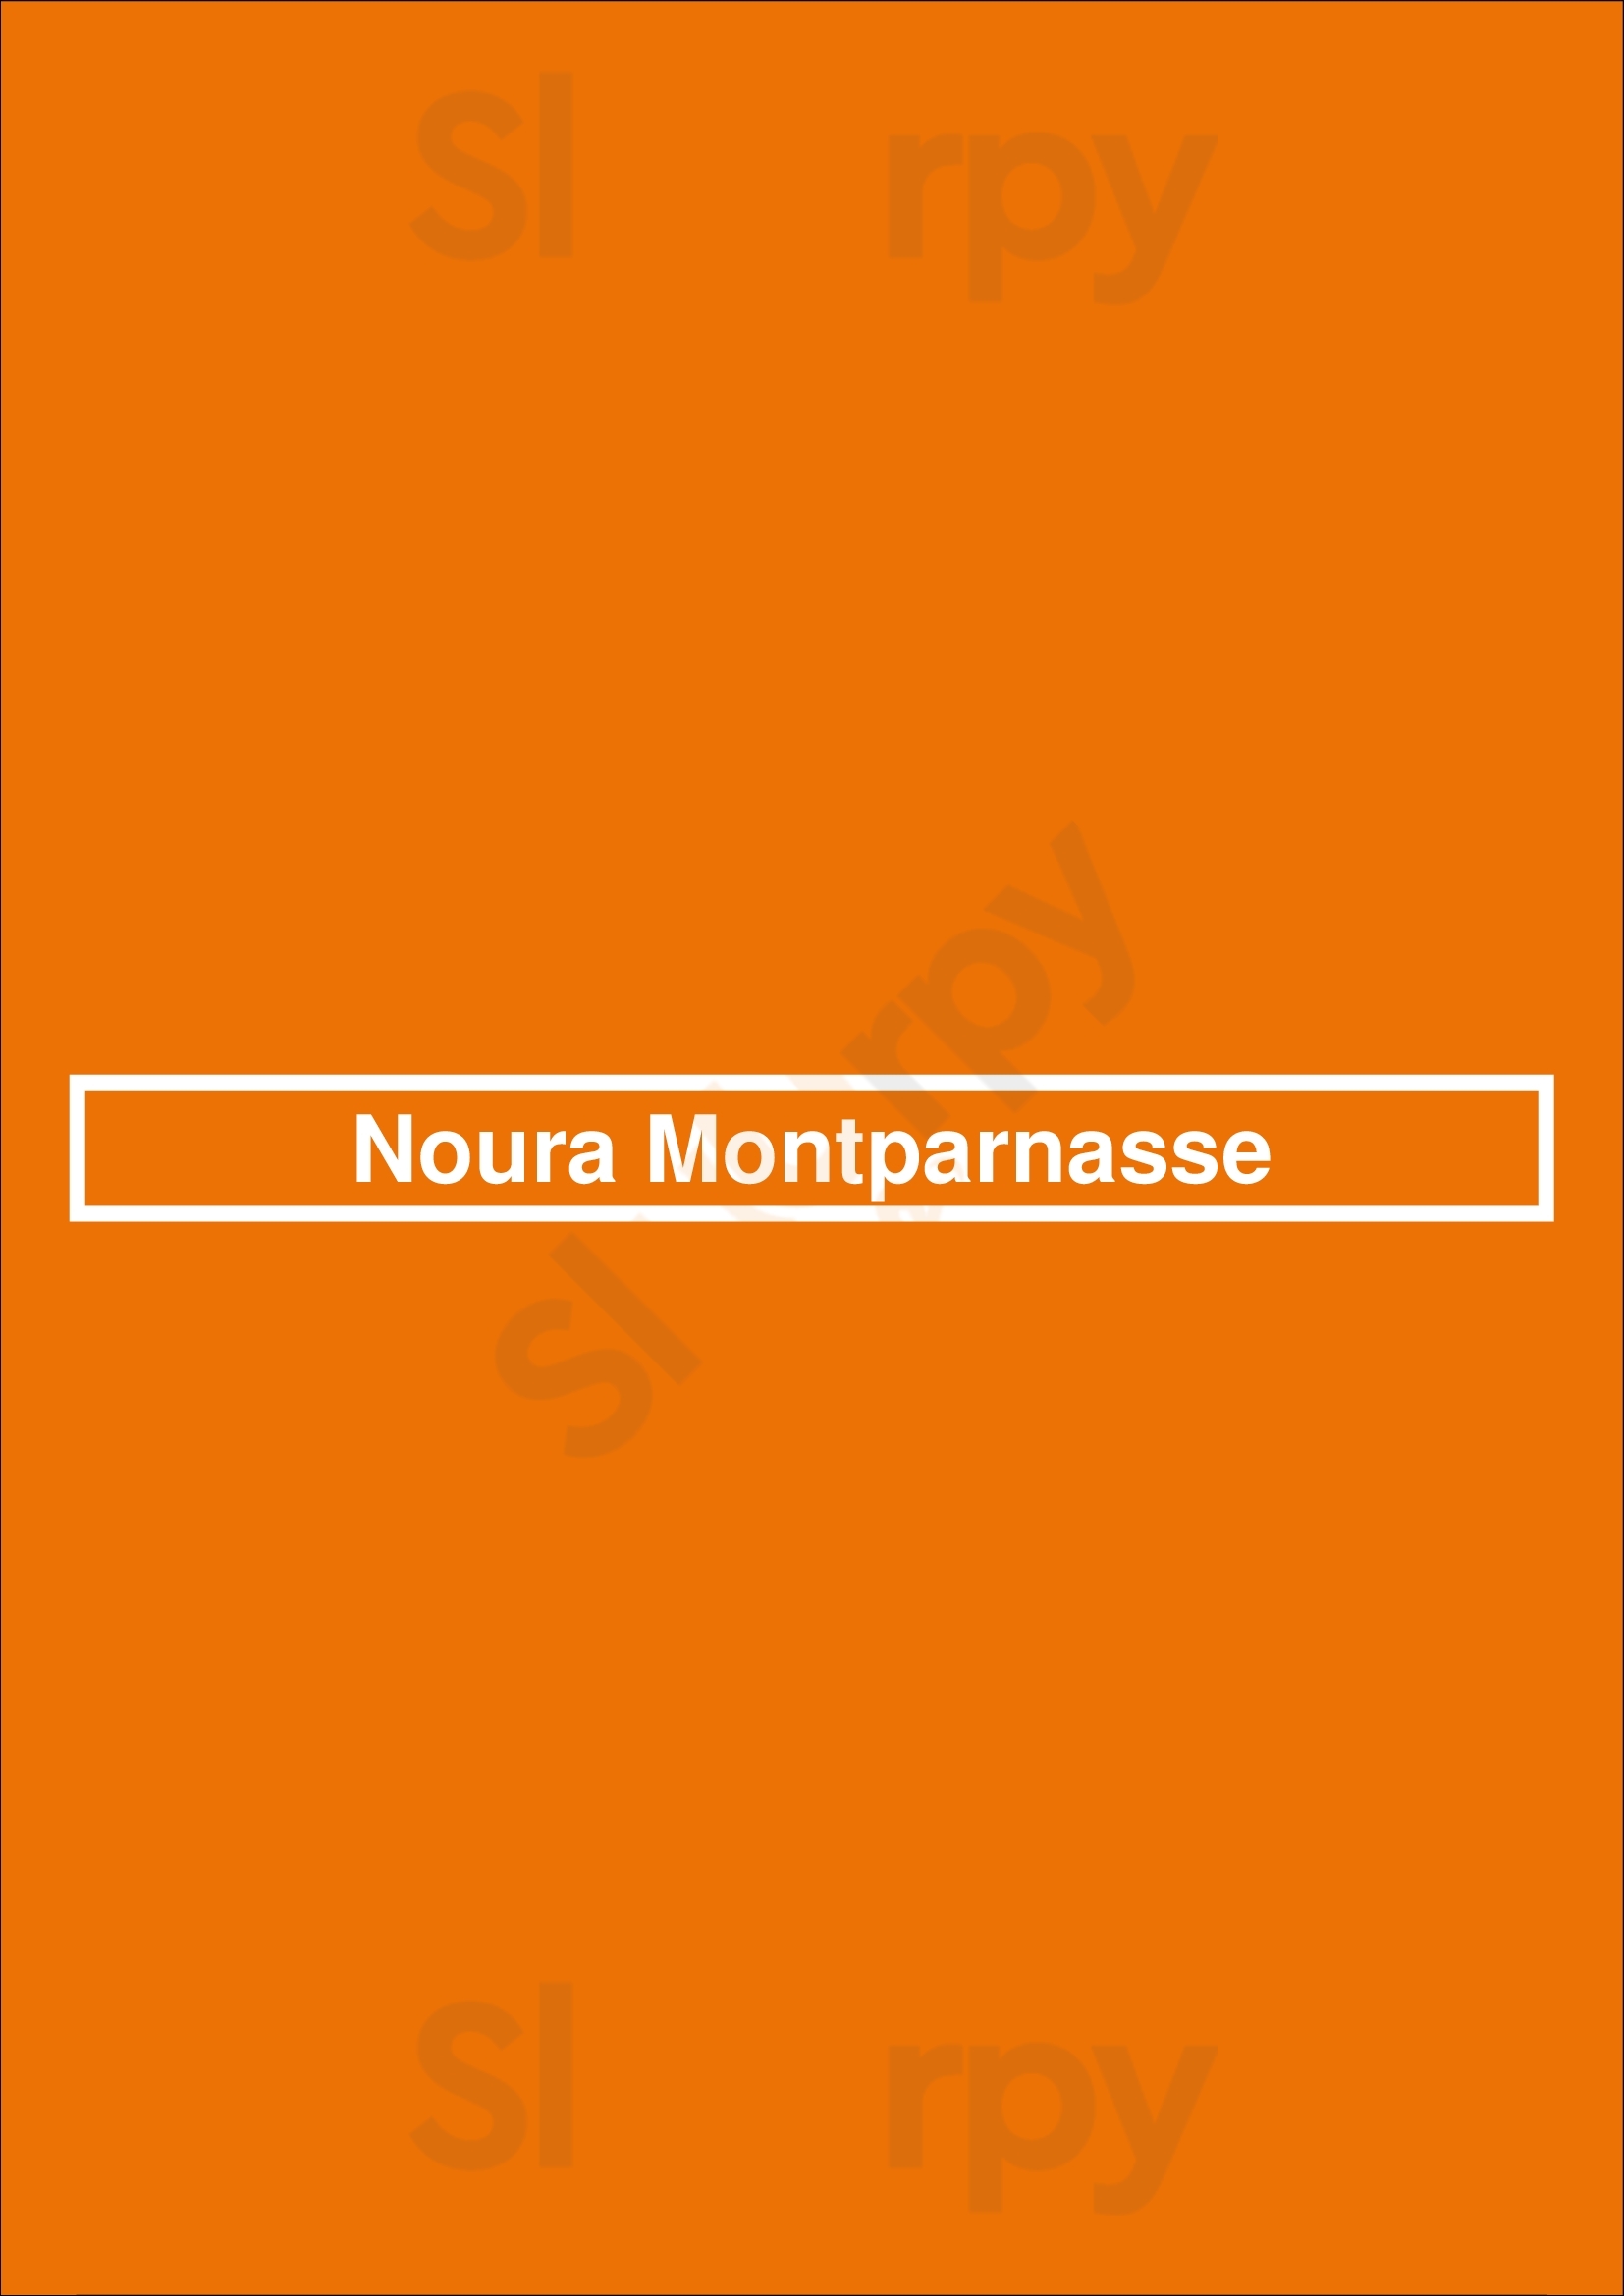 Noura Montparnasse Paris Menu - 1